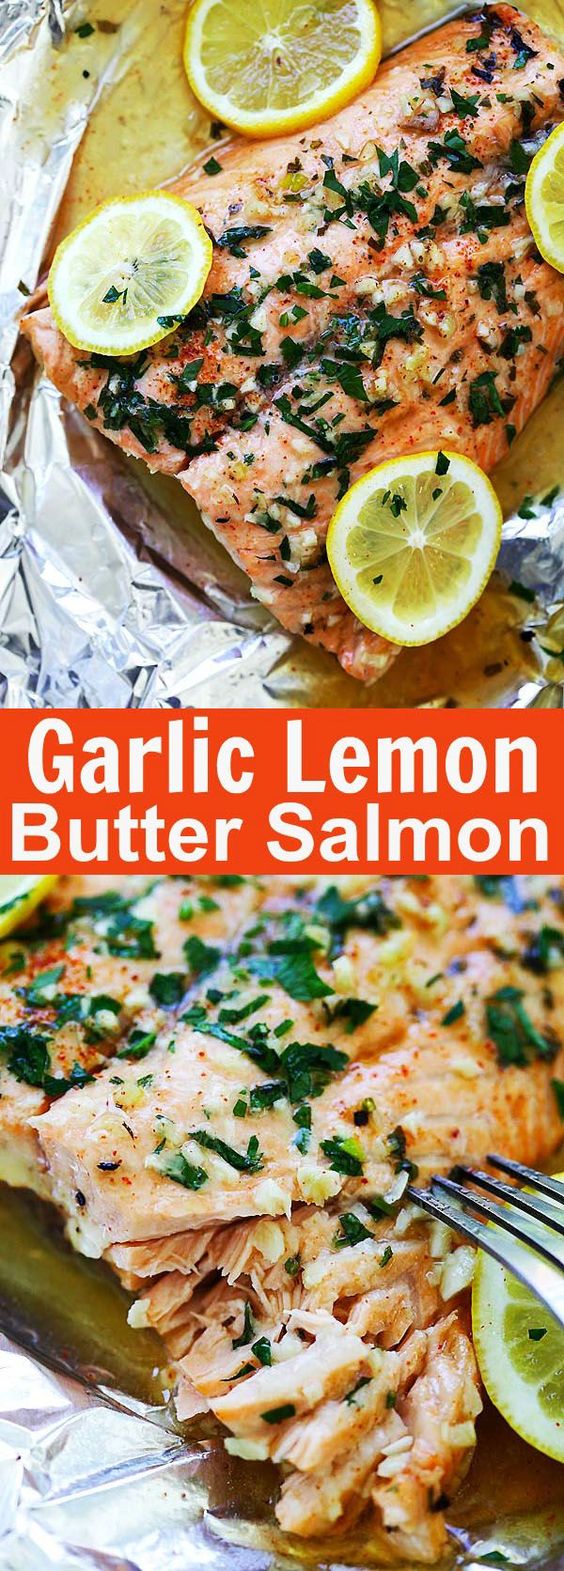 The Garlic, Lemon & Butter Salmon